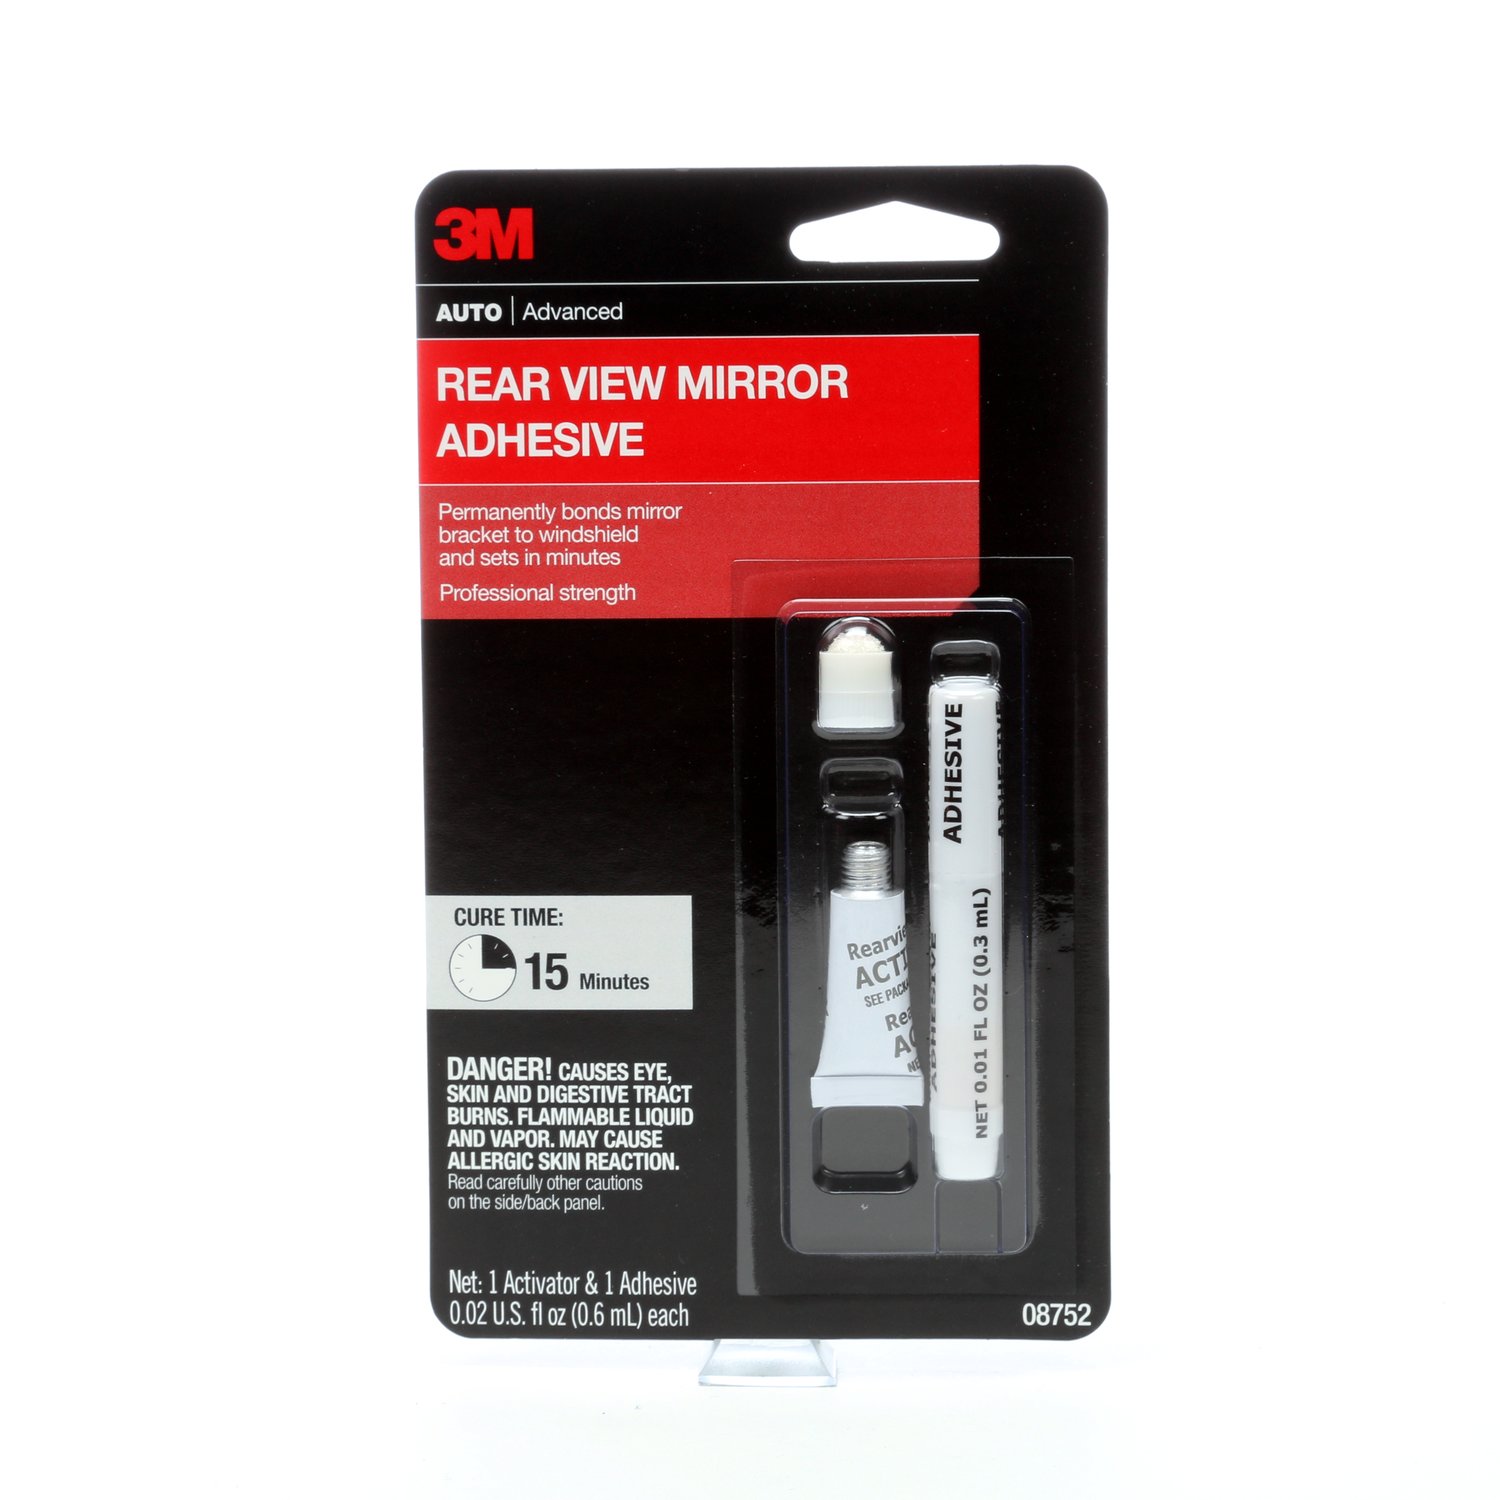 7100019082 - 3M Rearview Mirror Adhesive, 08752, 0.02 fl oz, 12 per case